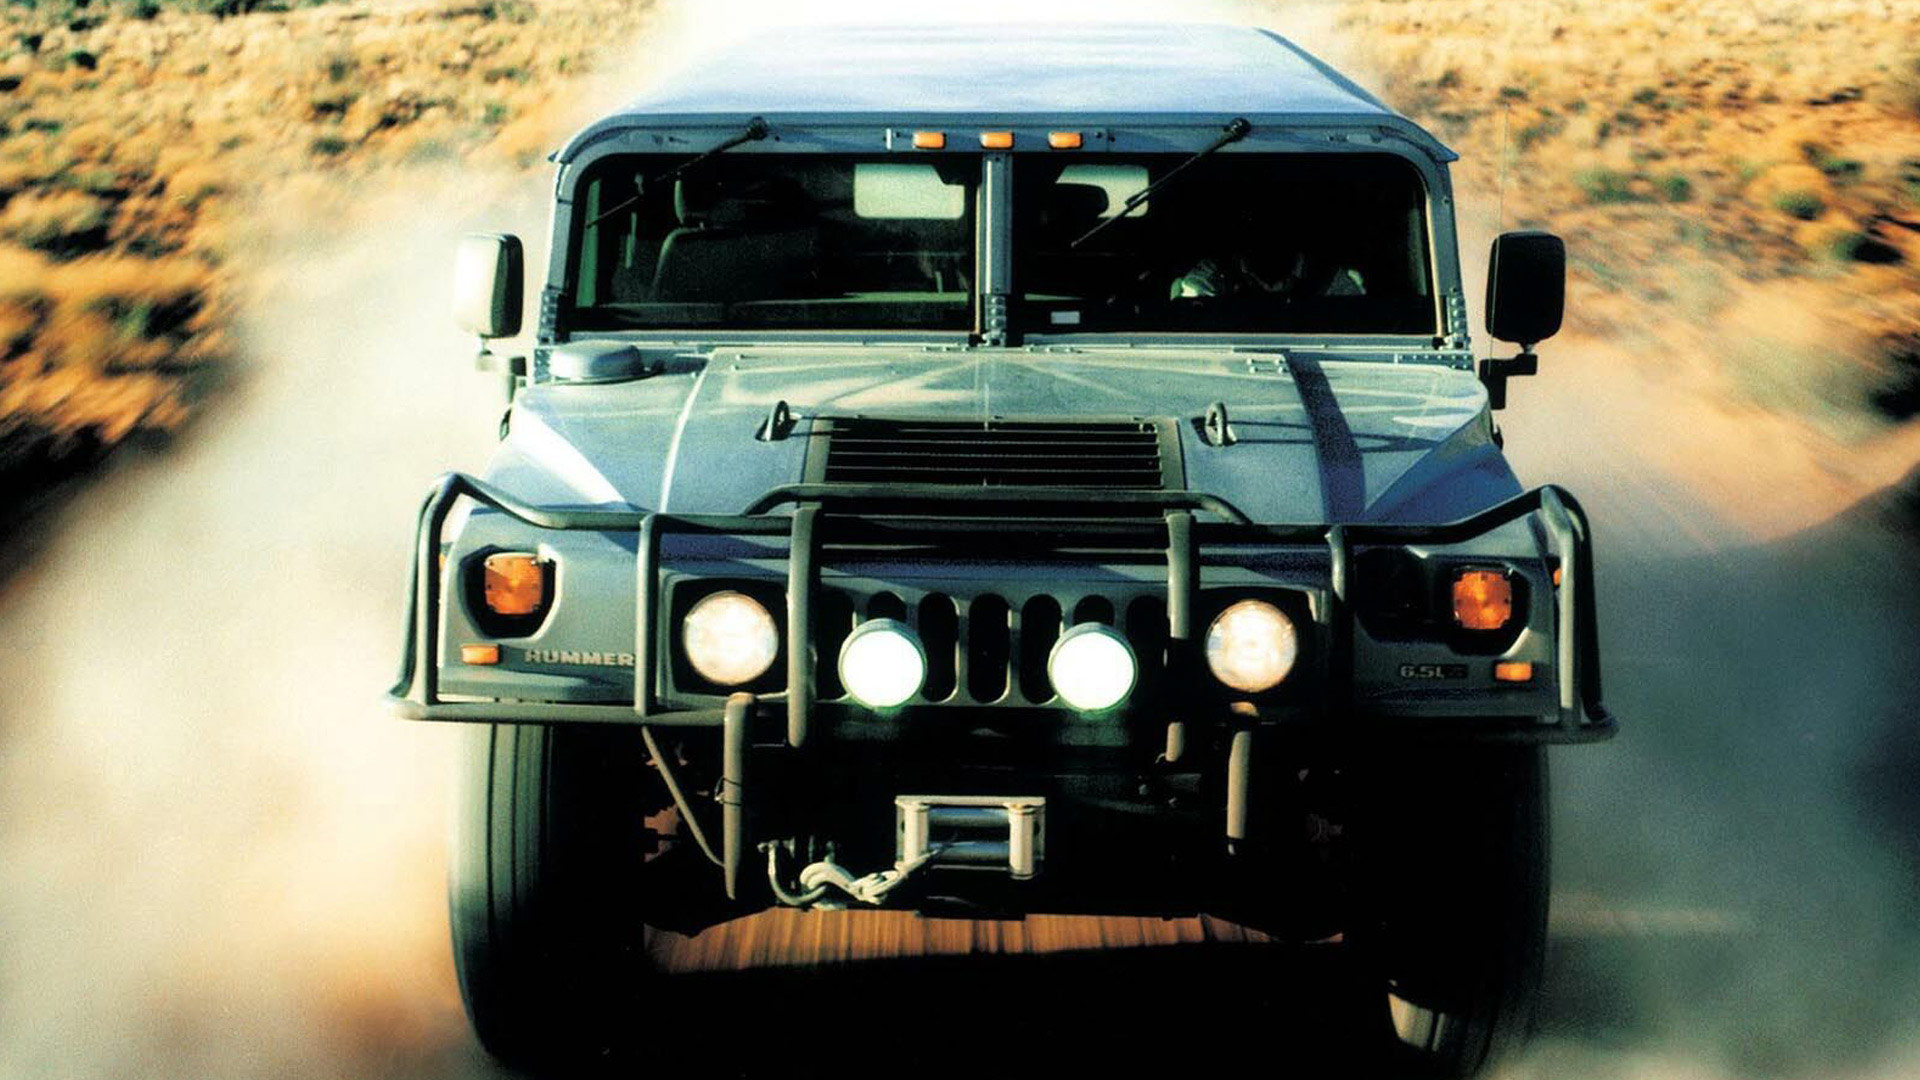 Vehicles Hummer HD Wallpaper | Background Image